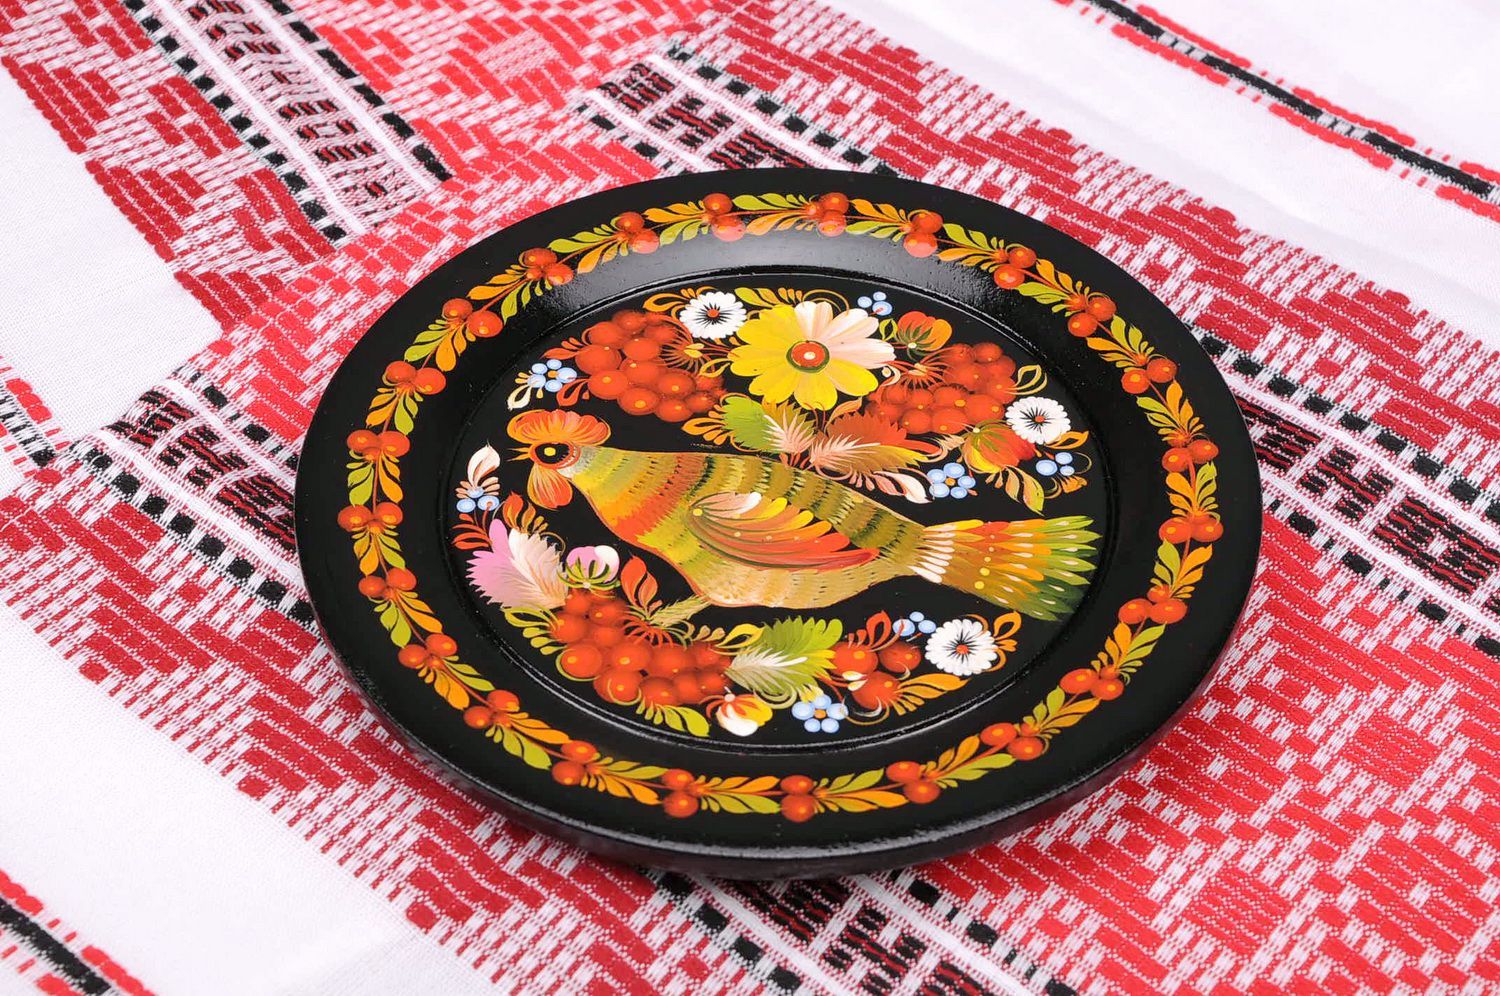 Декоративная тарелка расписаная вручную фото 2